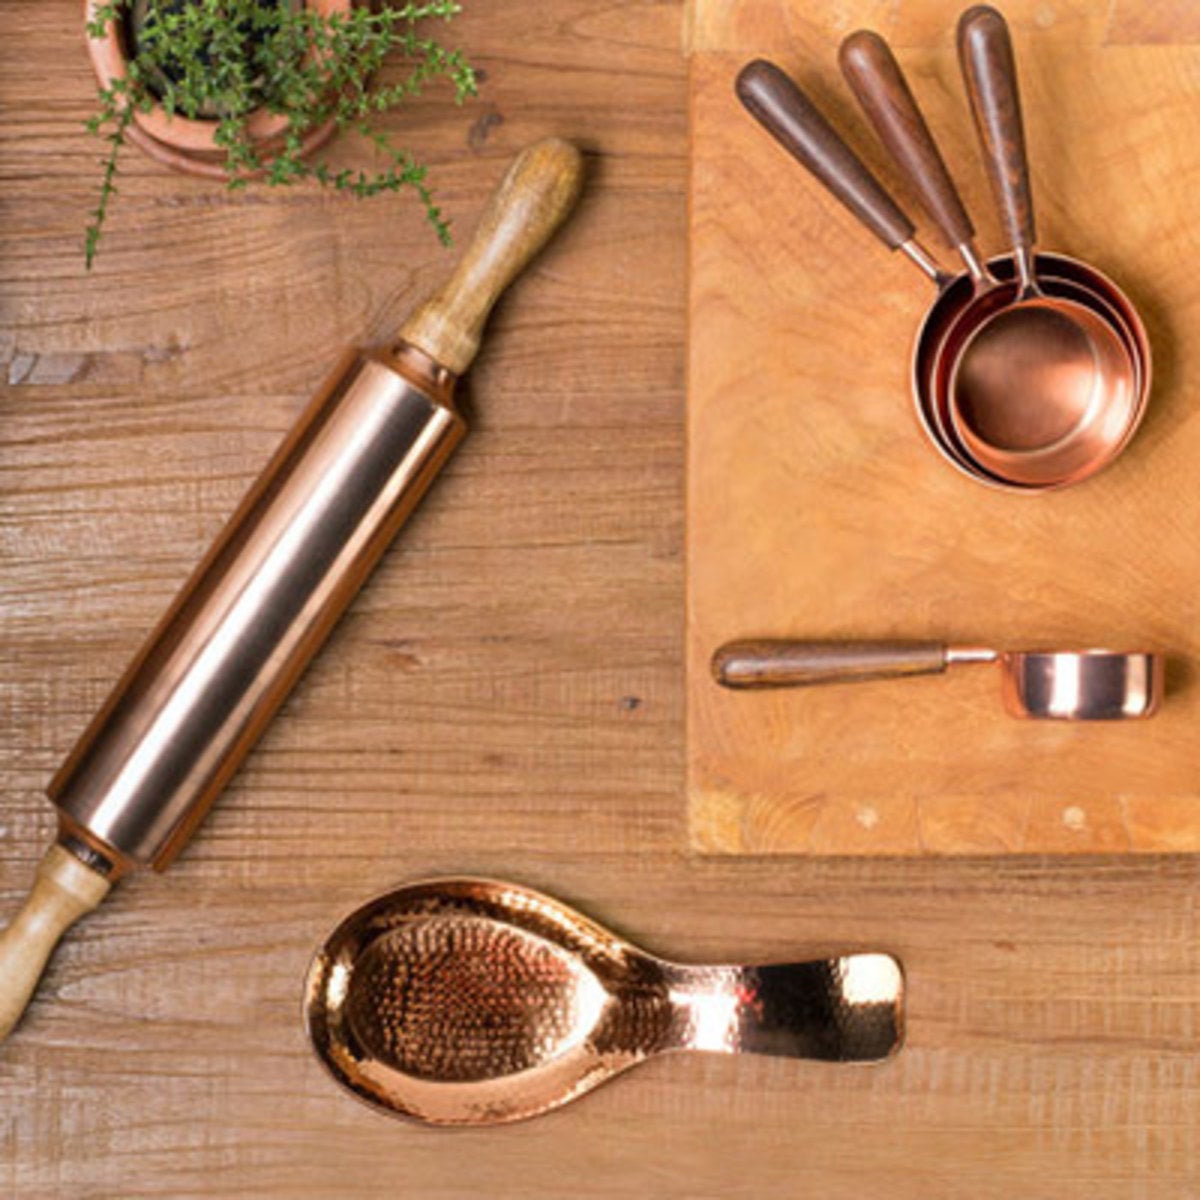 Handcrafted Copper Utensils & Tools